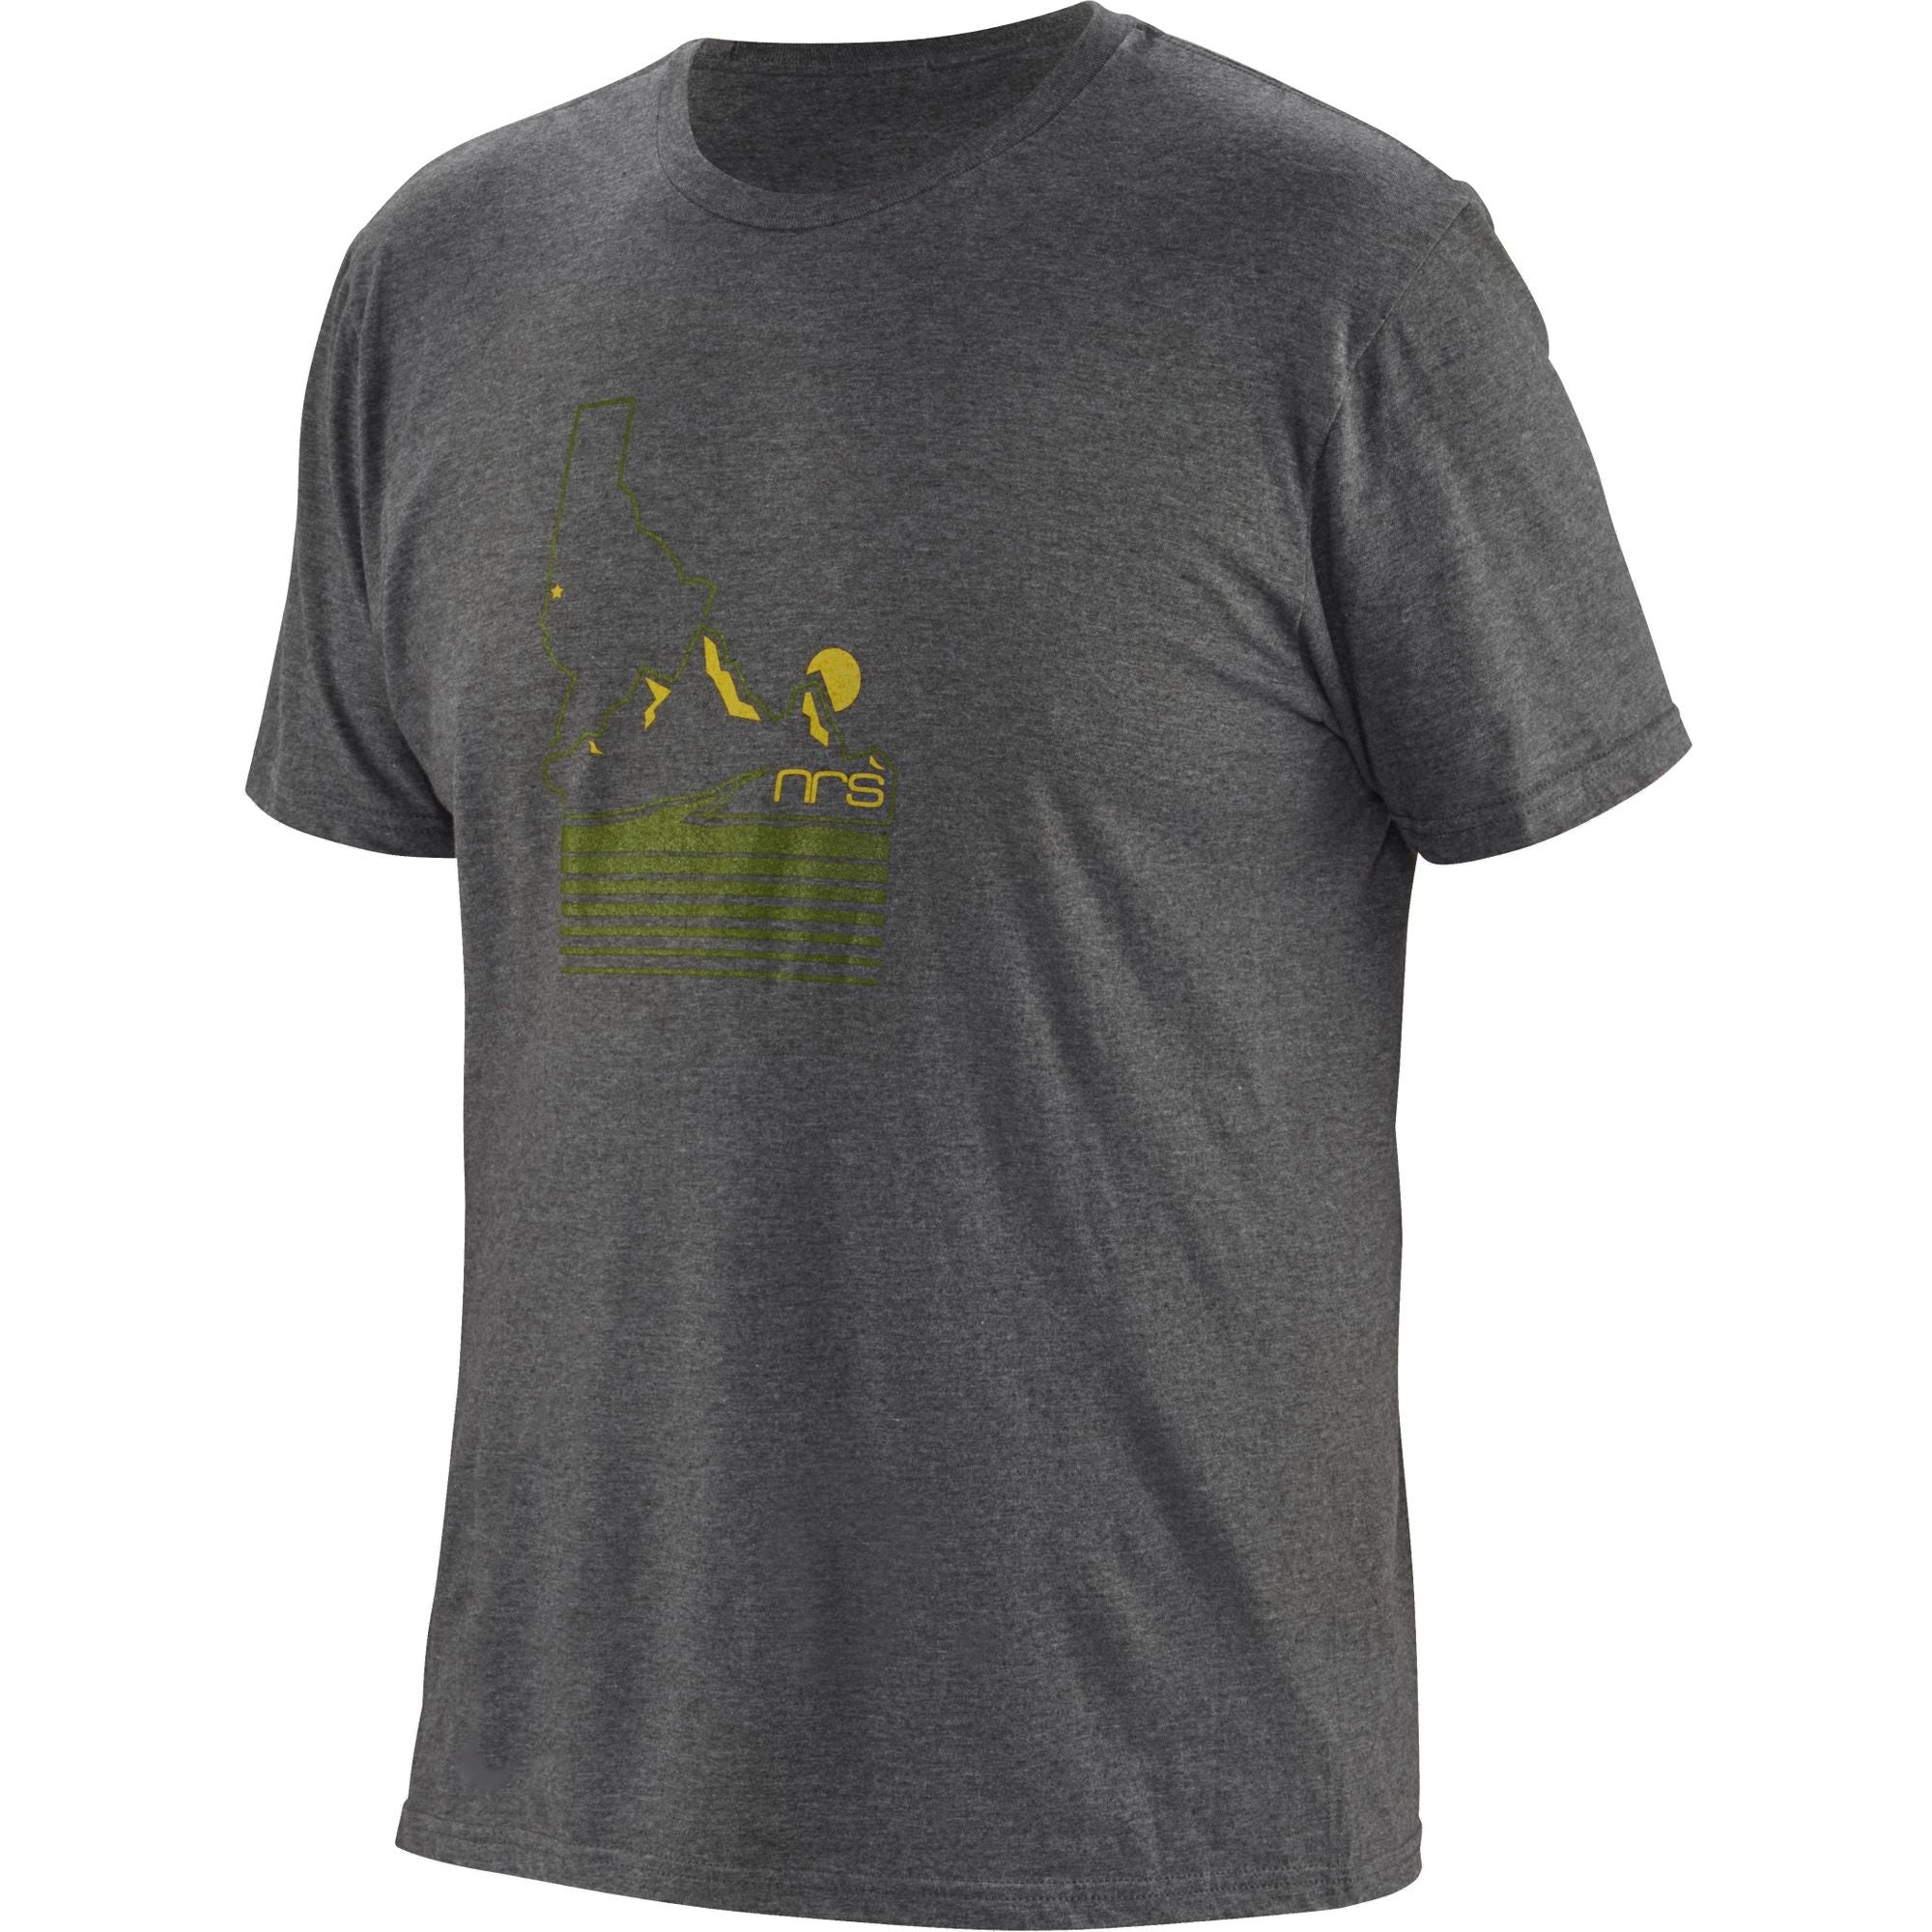 NRS - Men's Idaho T-Shirt